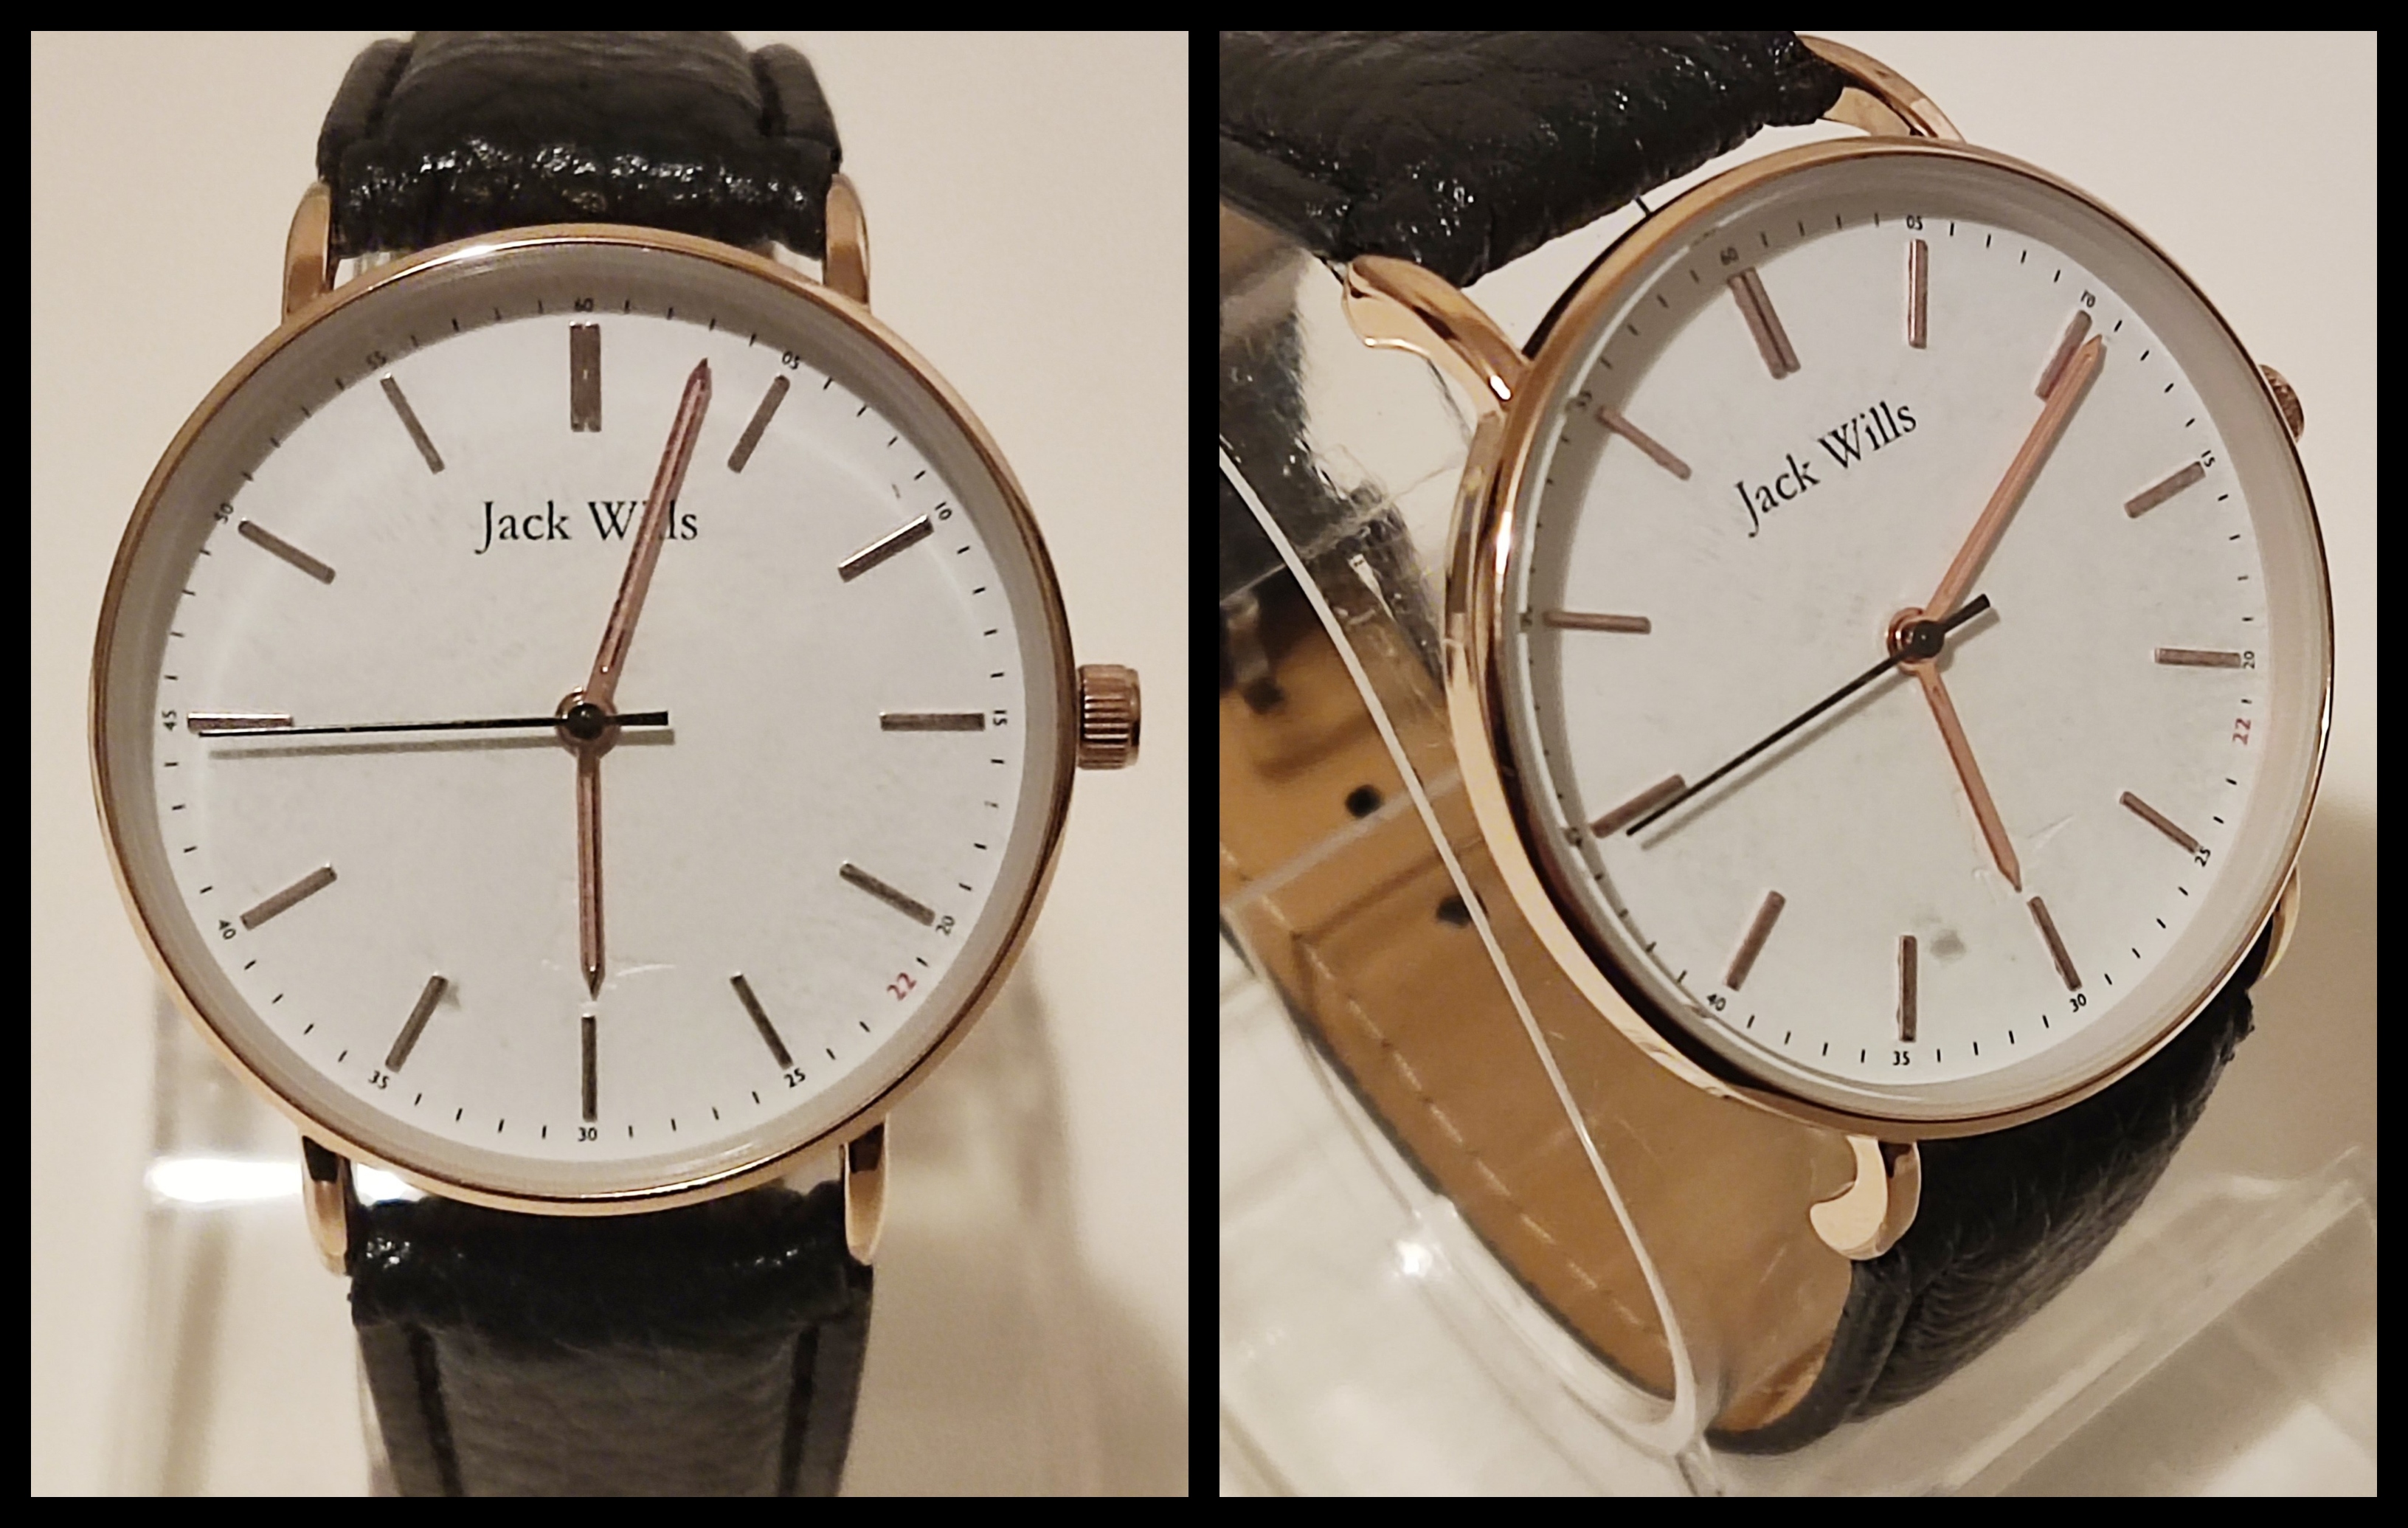 A Jack Wills Gent's watch